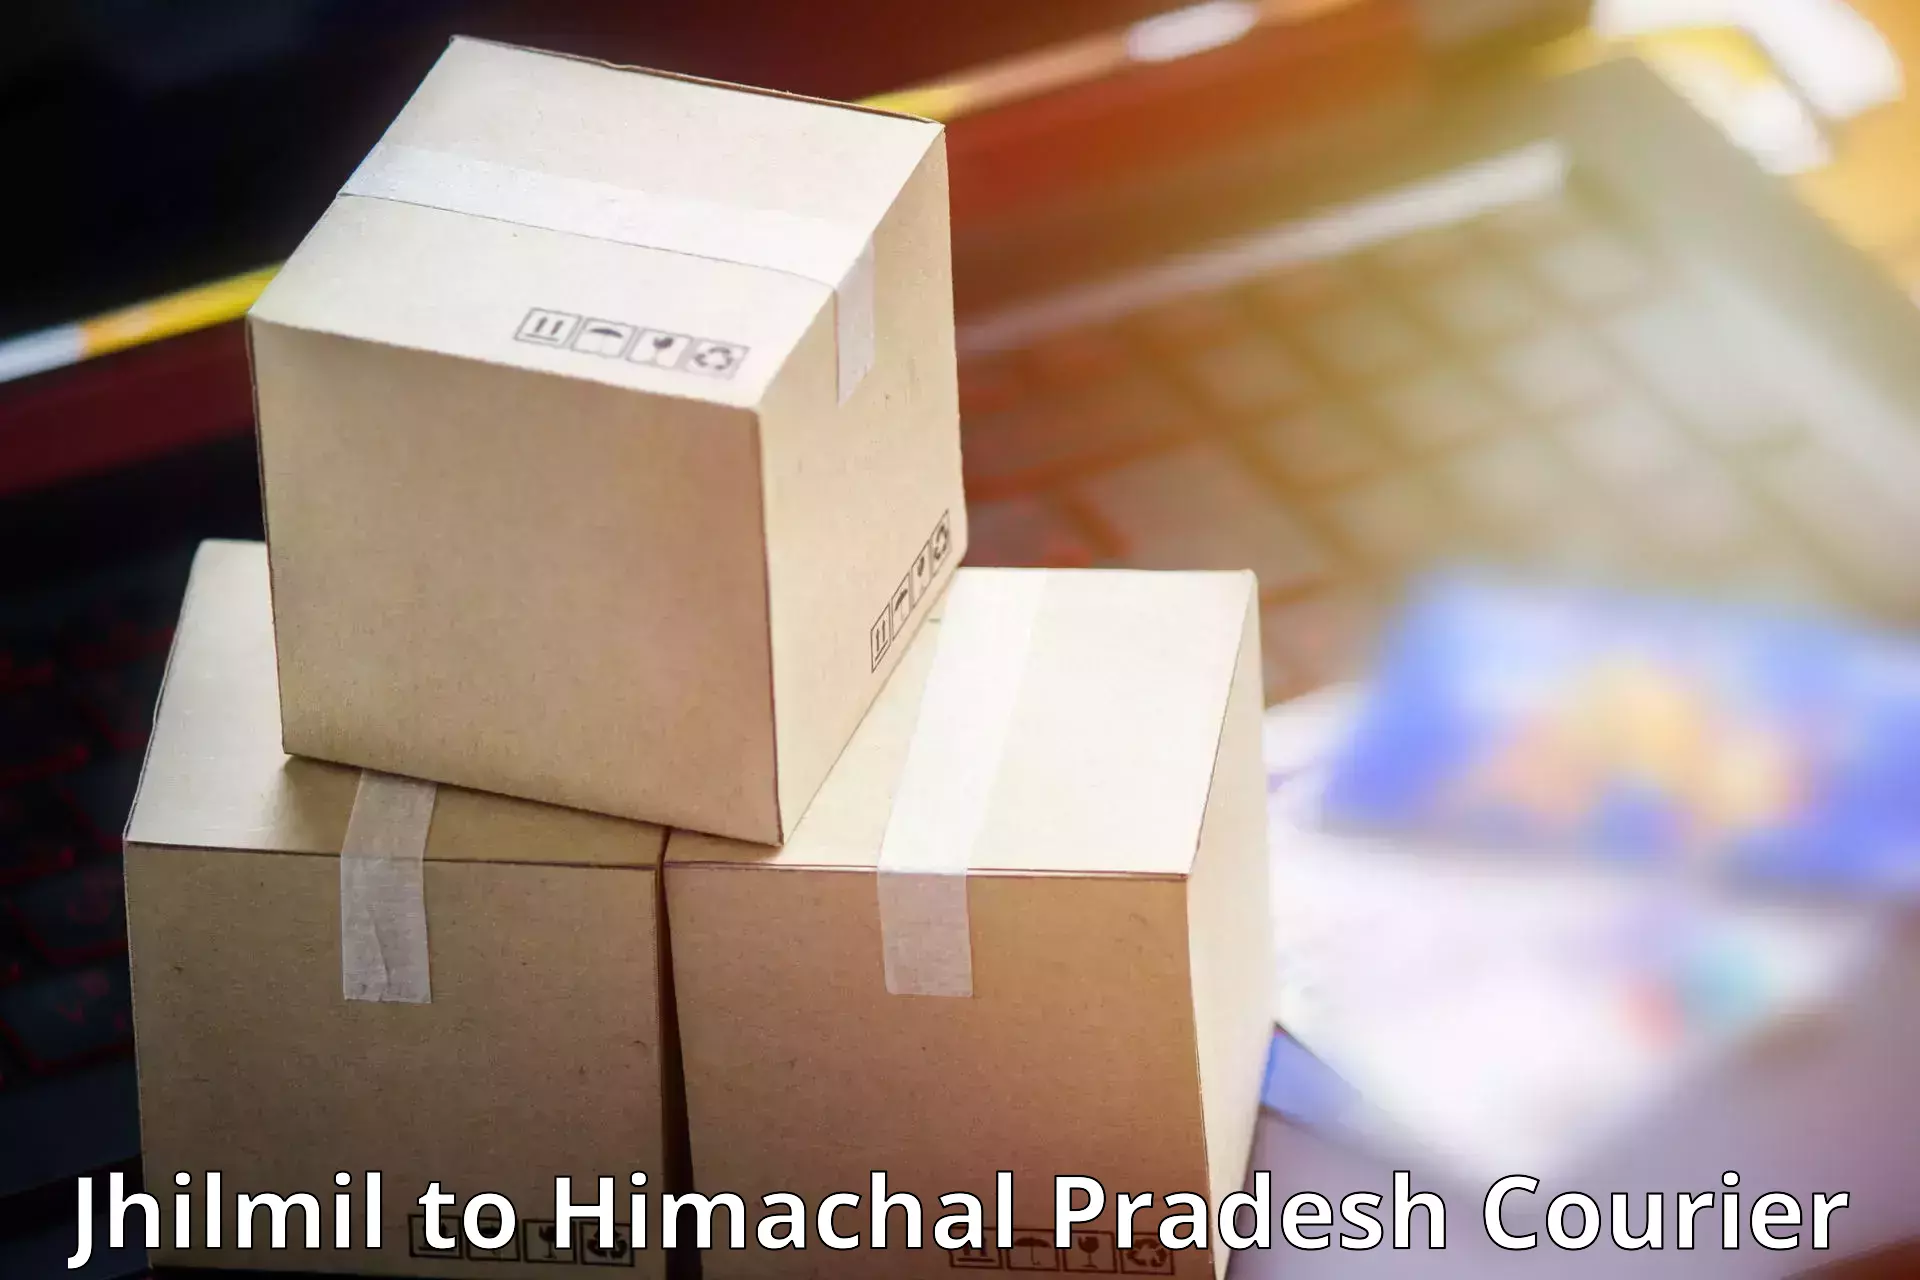 High-efficiency logistics Jhilmil to Dheera